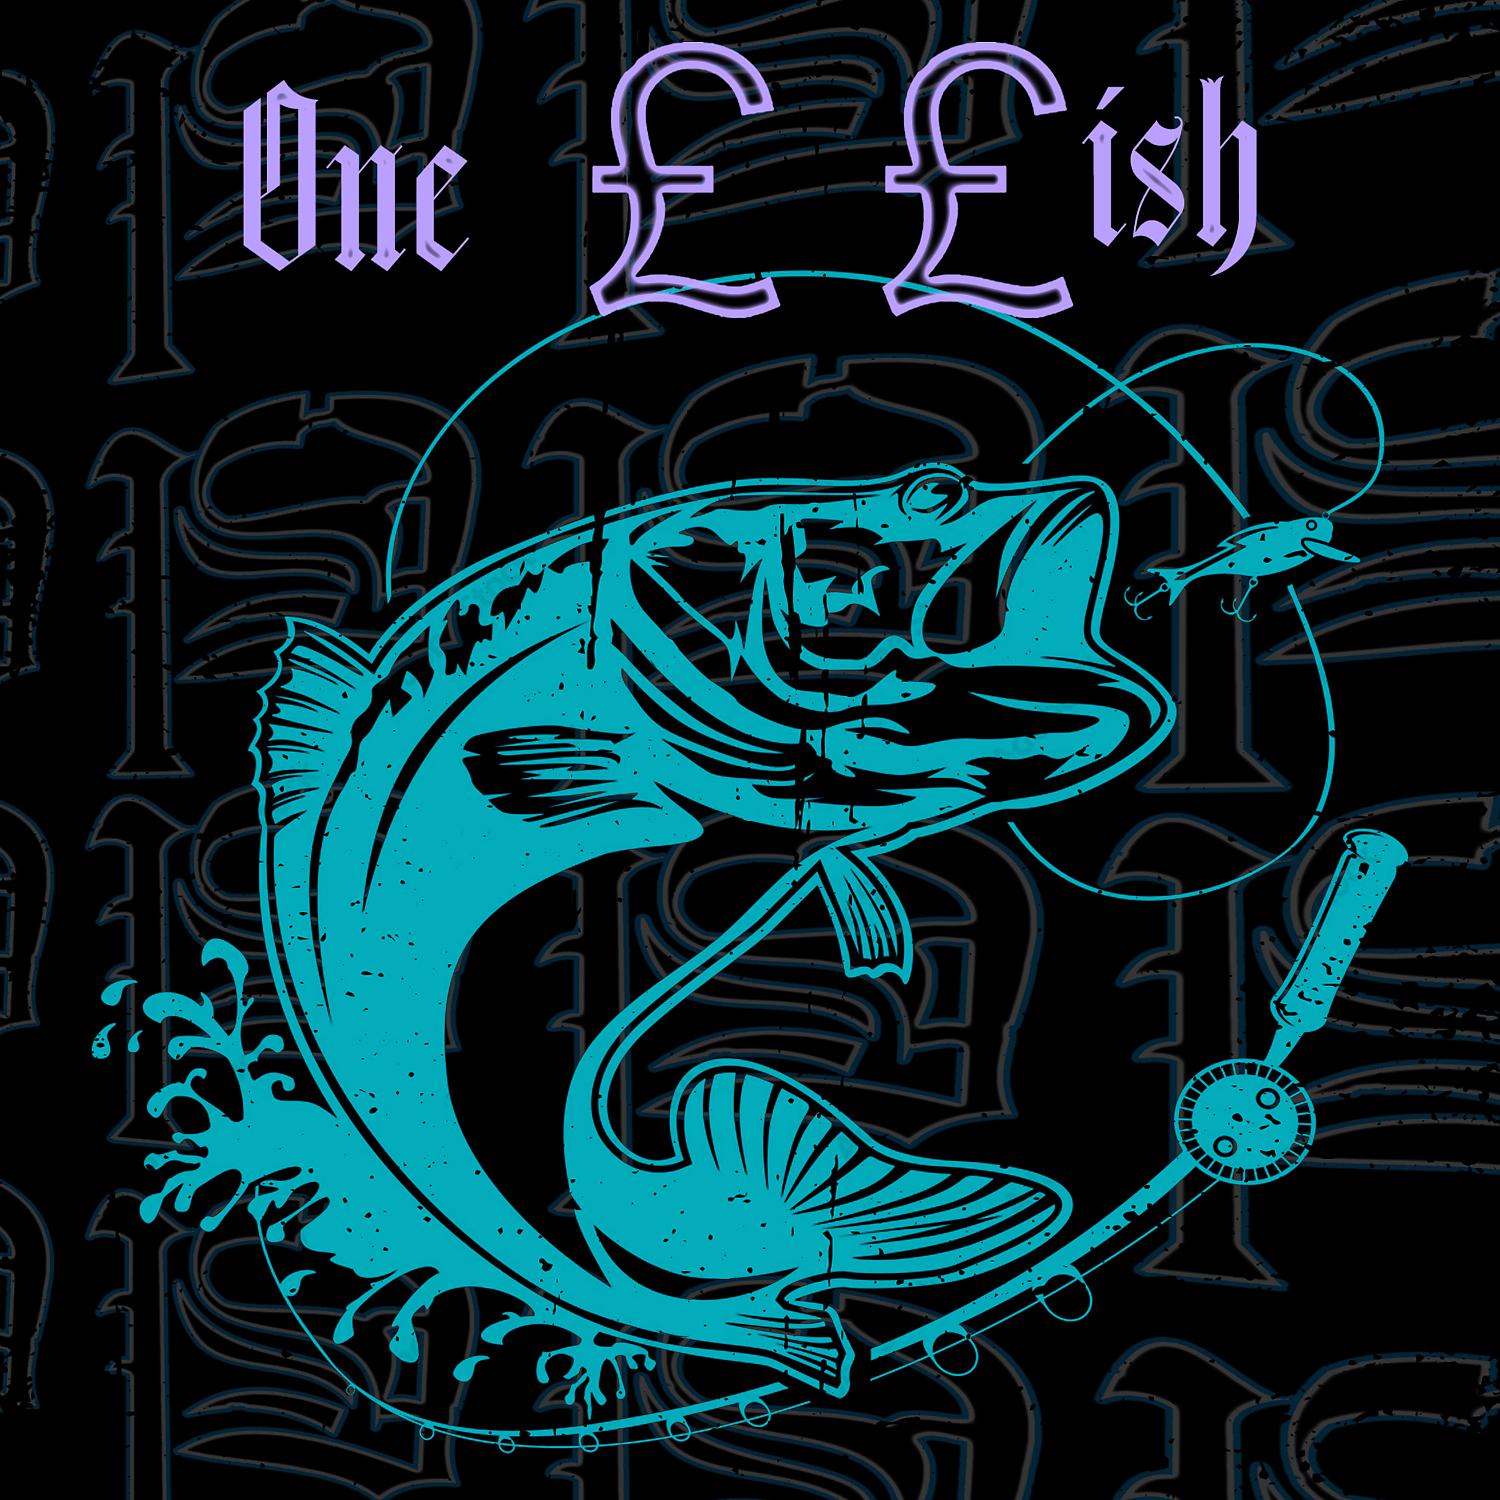 Постер альбома One Pound Fish